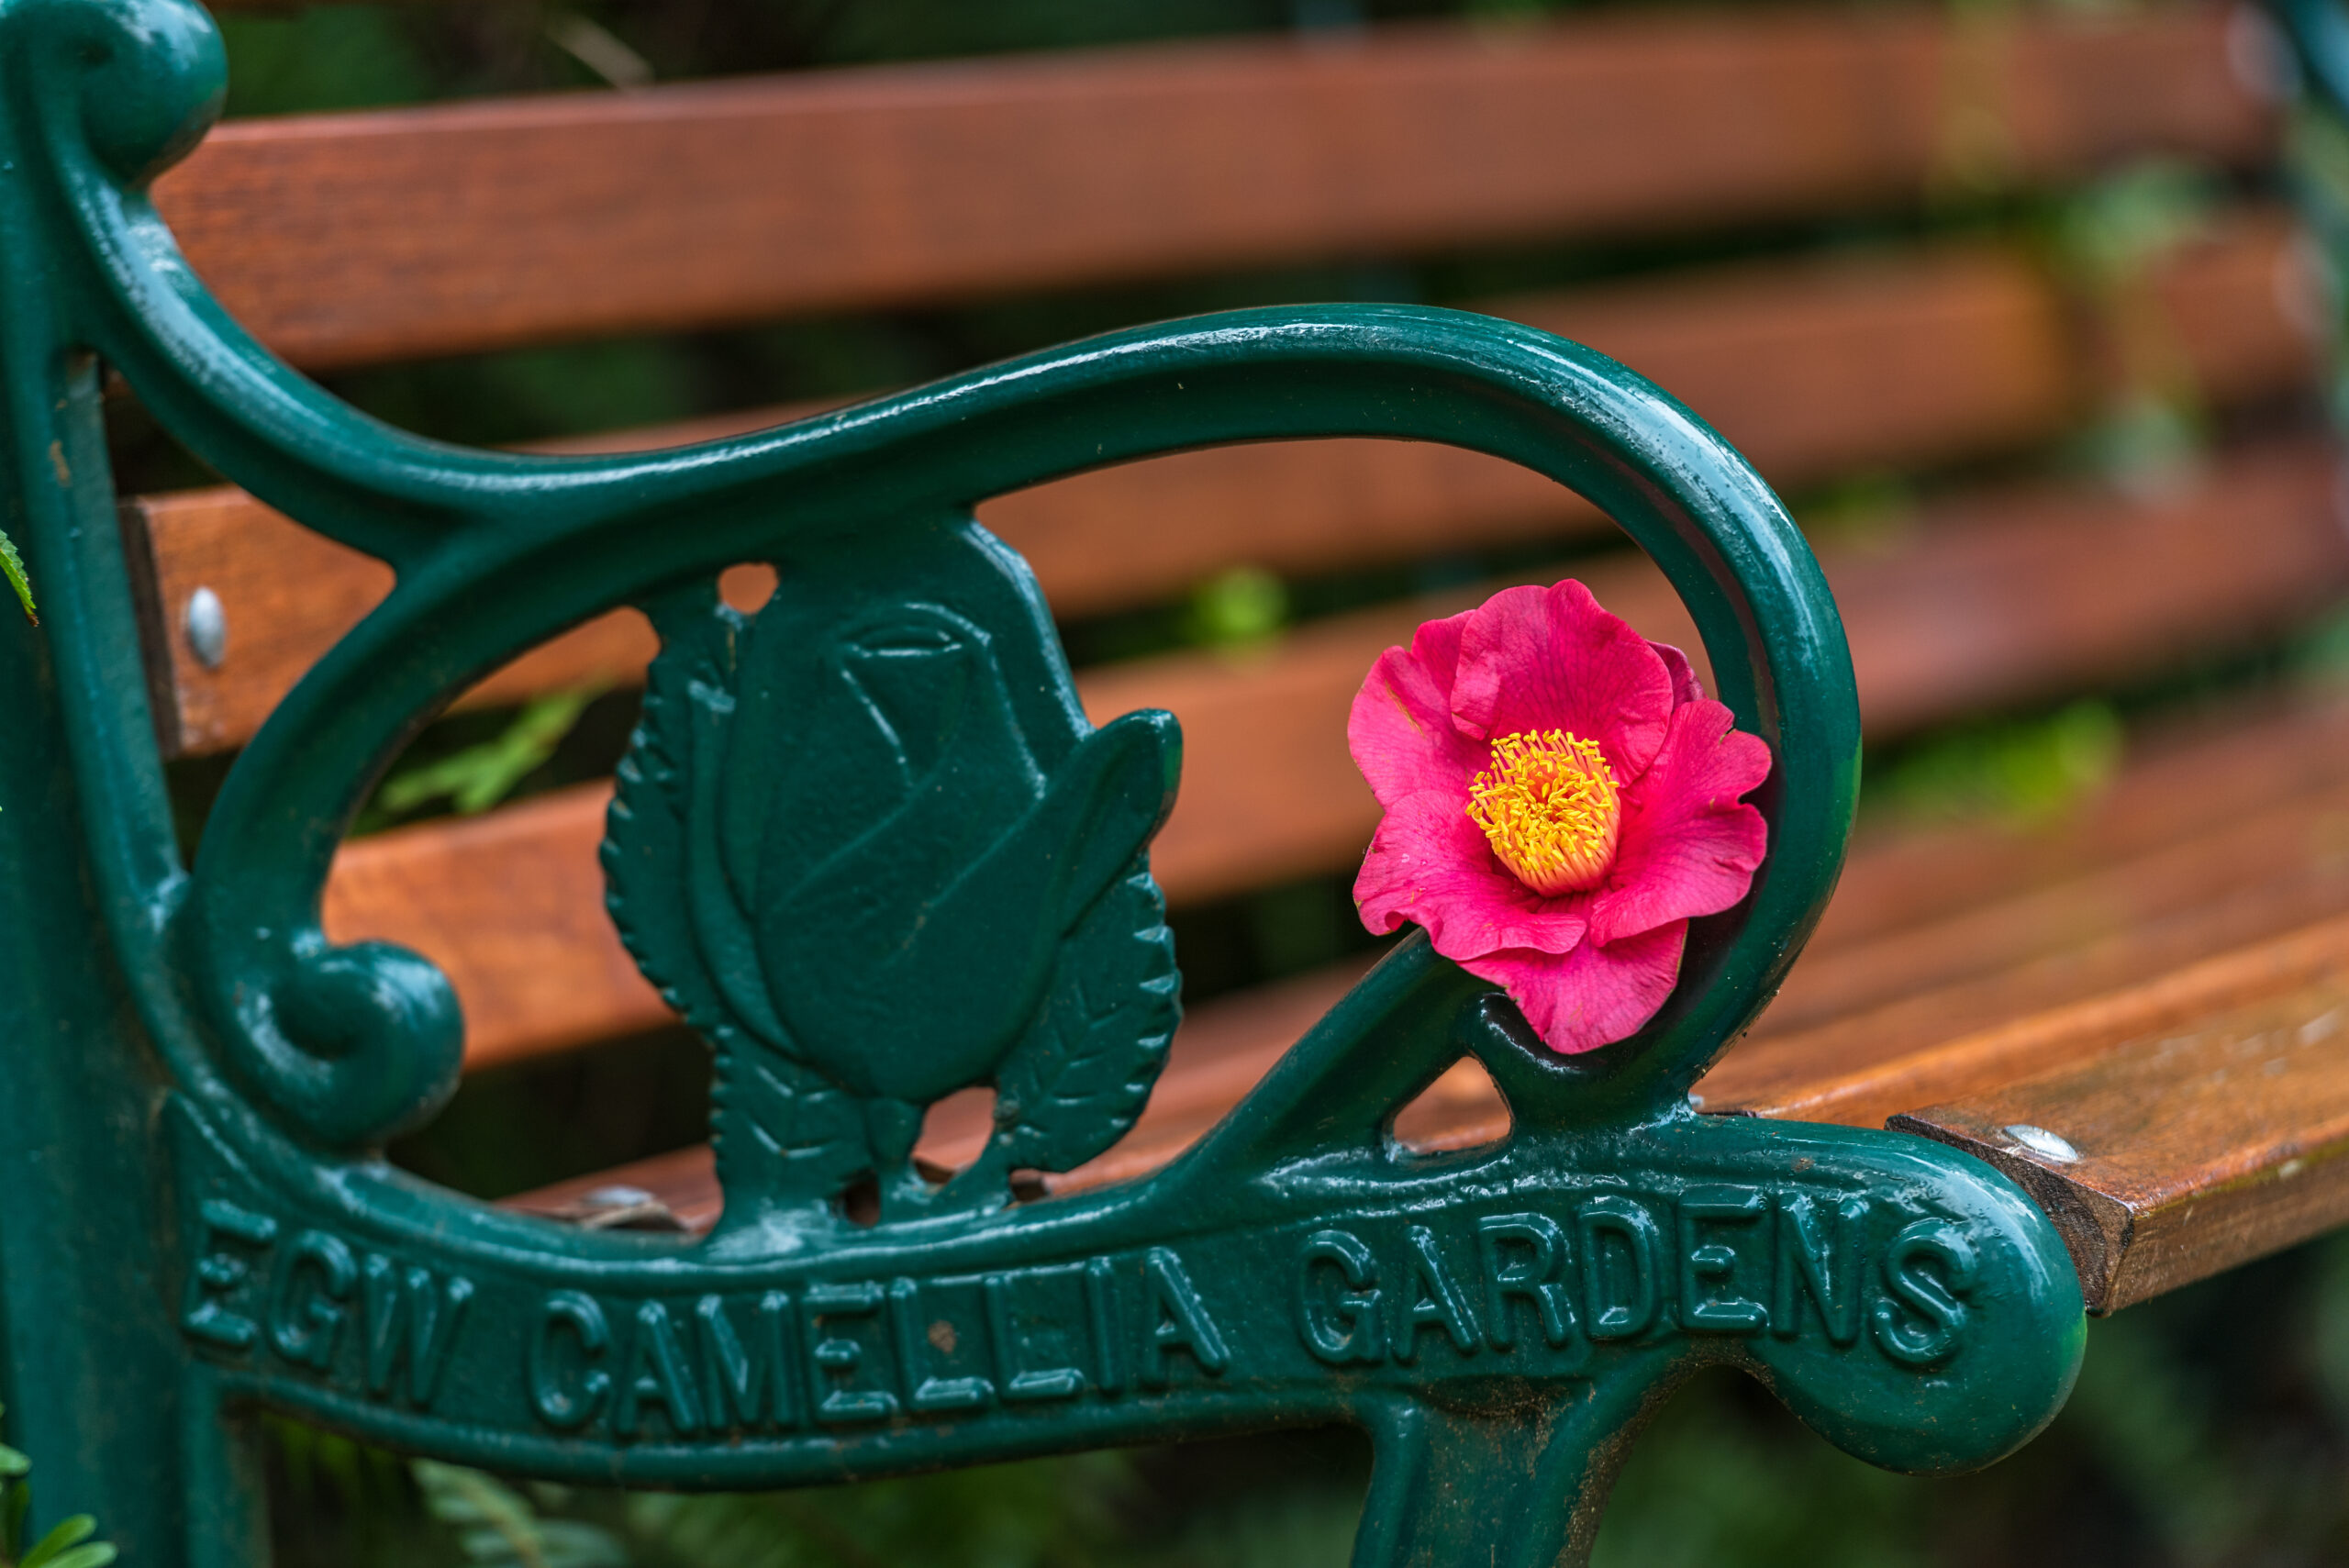 E.G Waterhouse Camellia Gardens - bench at this Sydney picnic spot